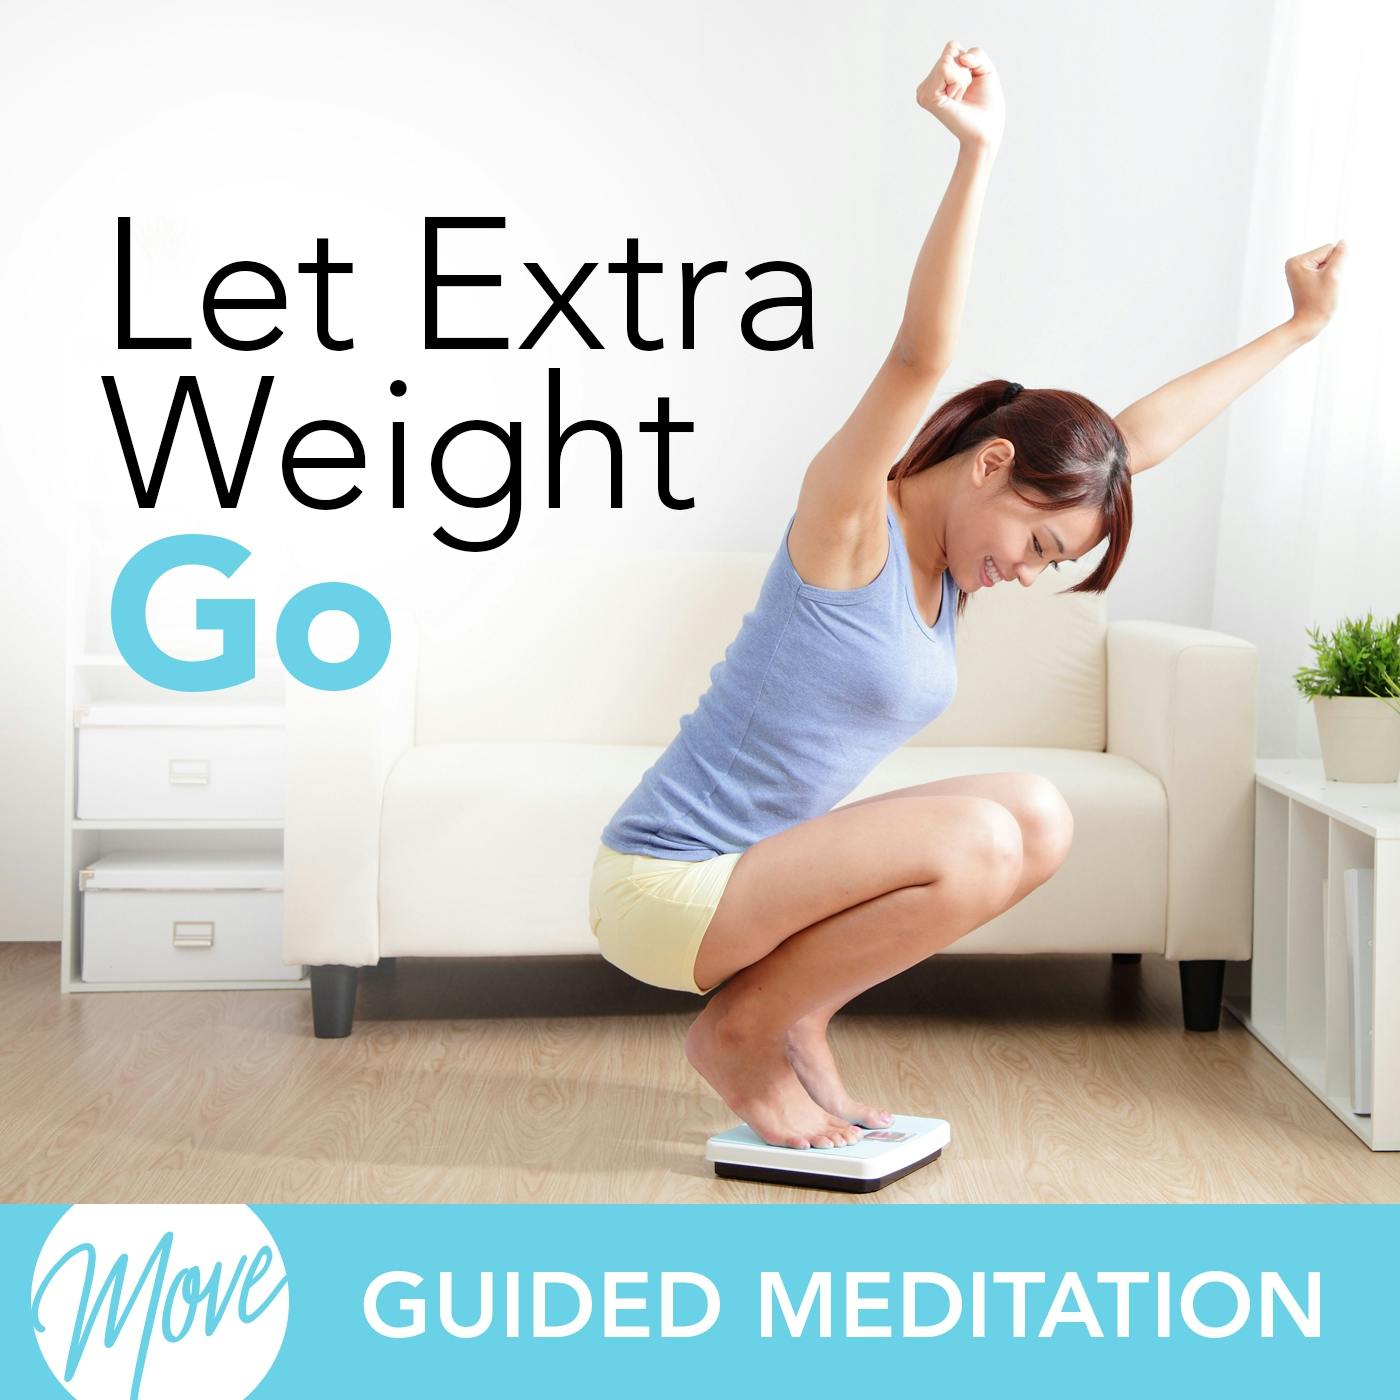 Let Extra Weight Go! - Amy Applebaum